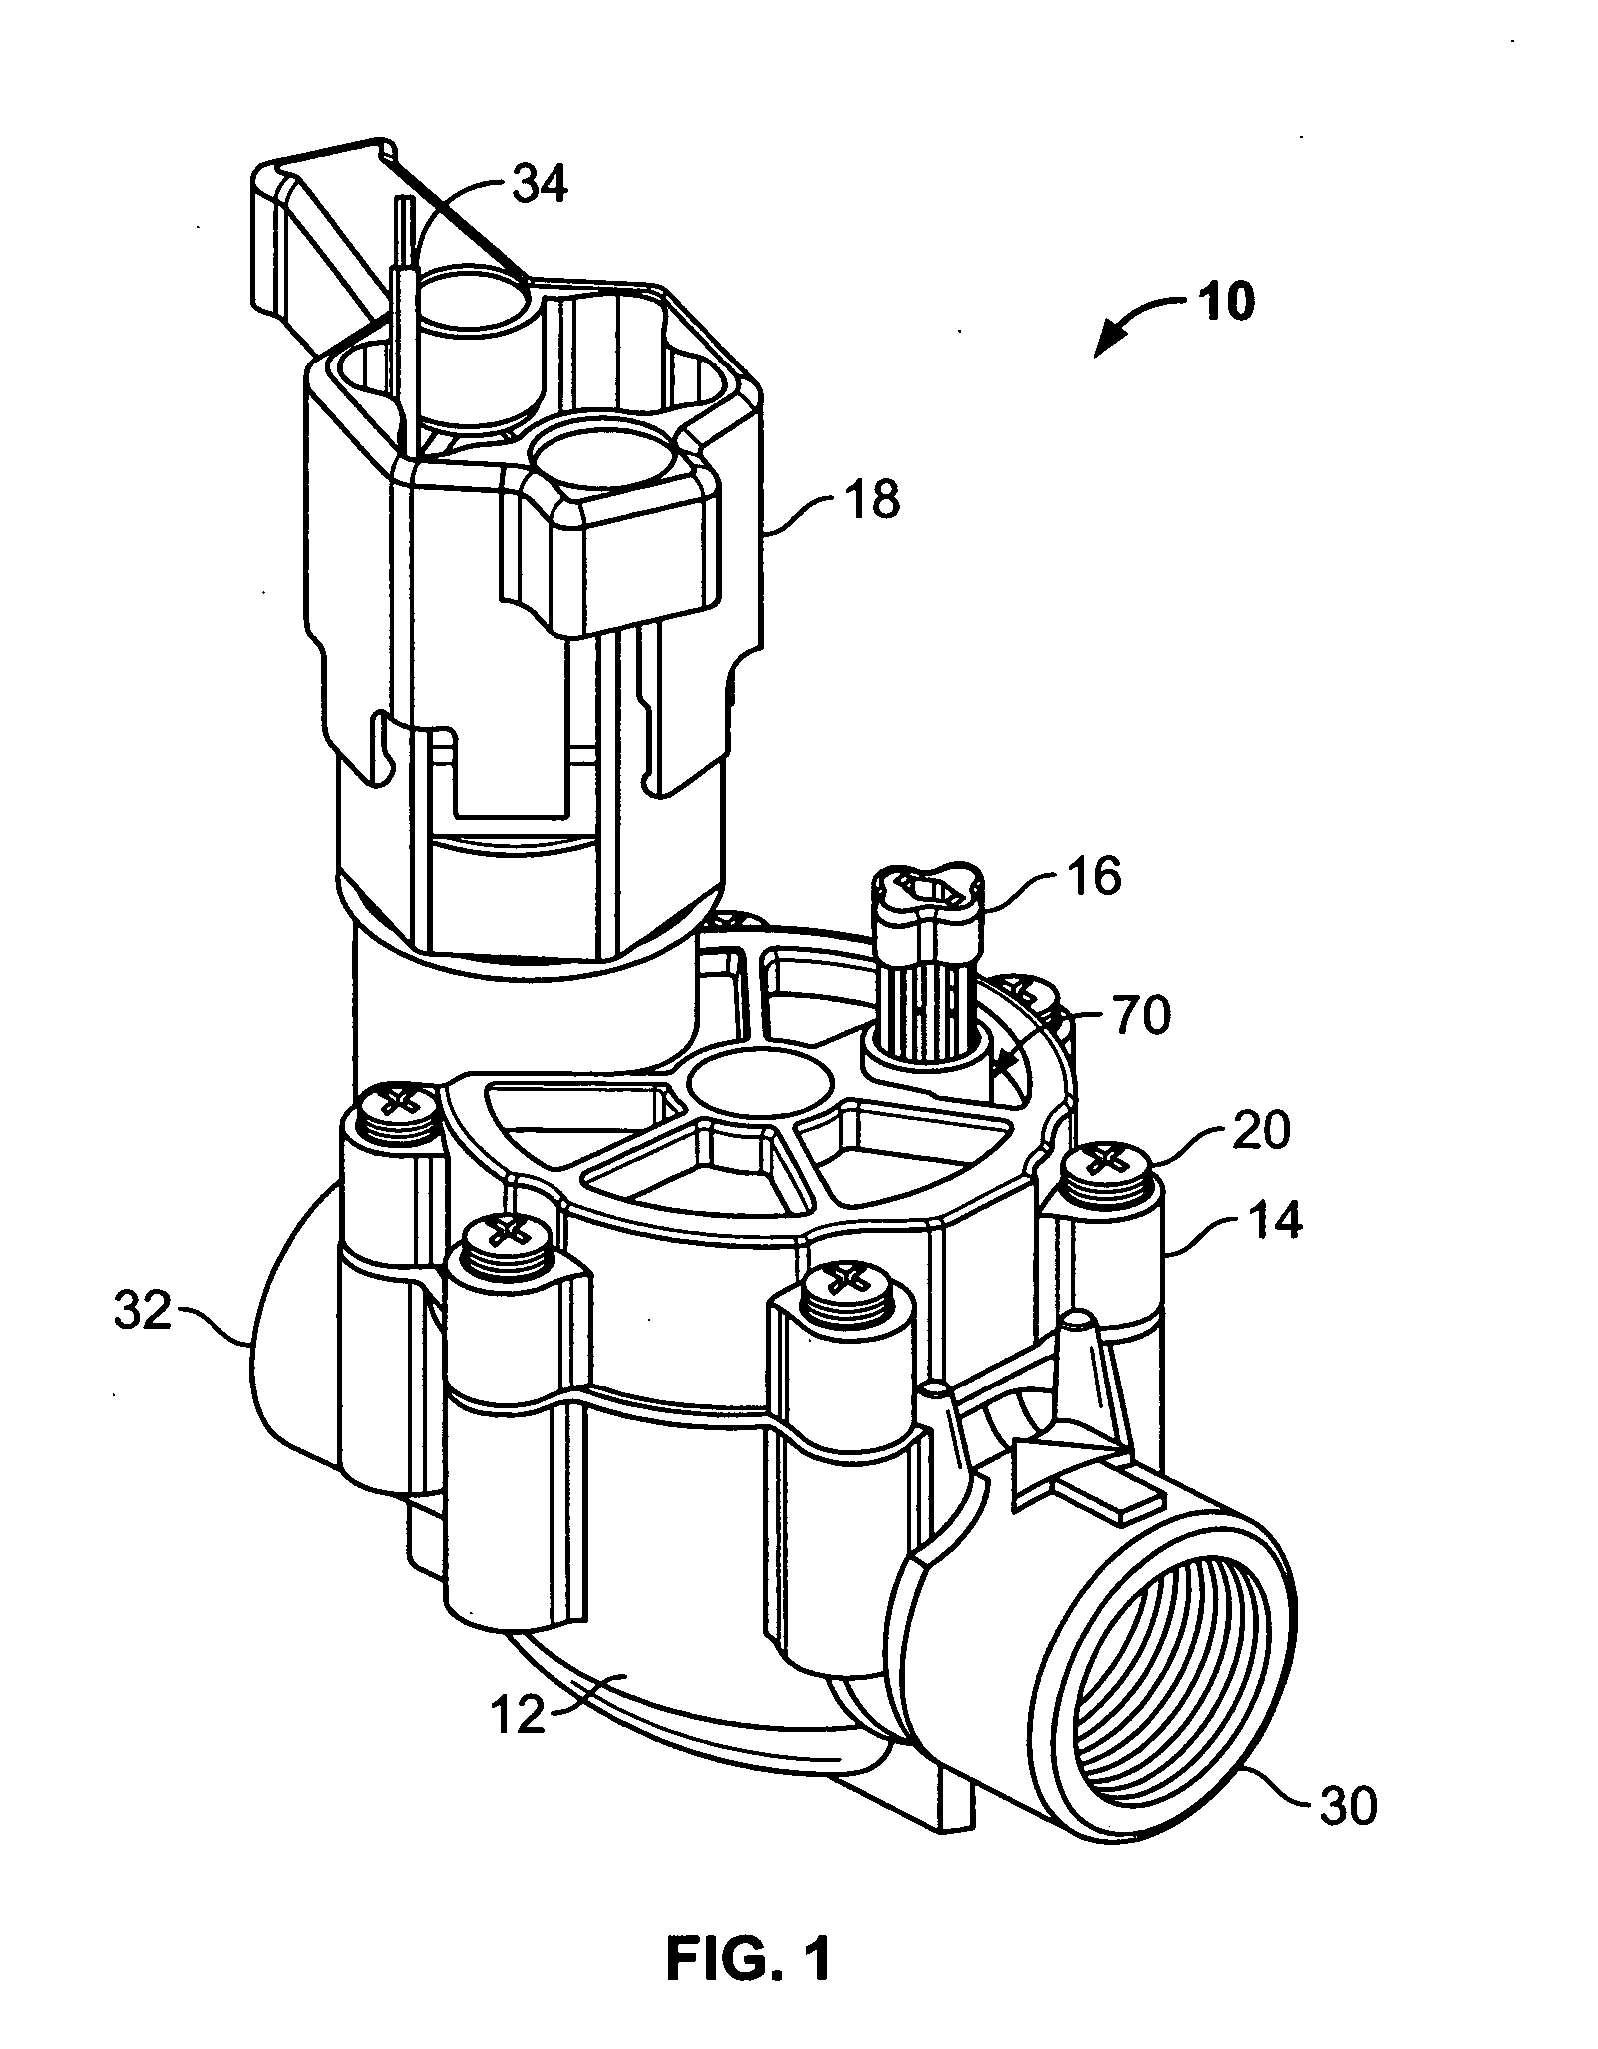 Low-flow valve